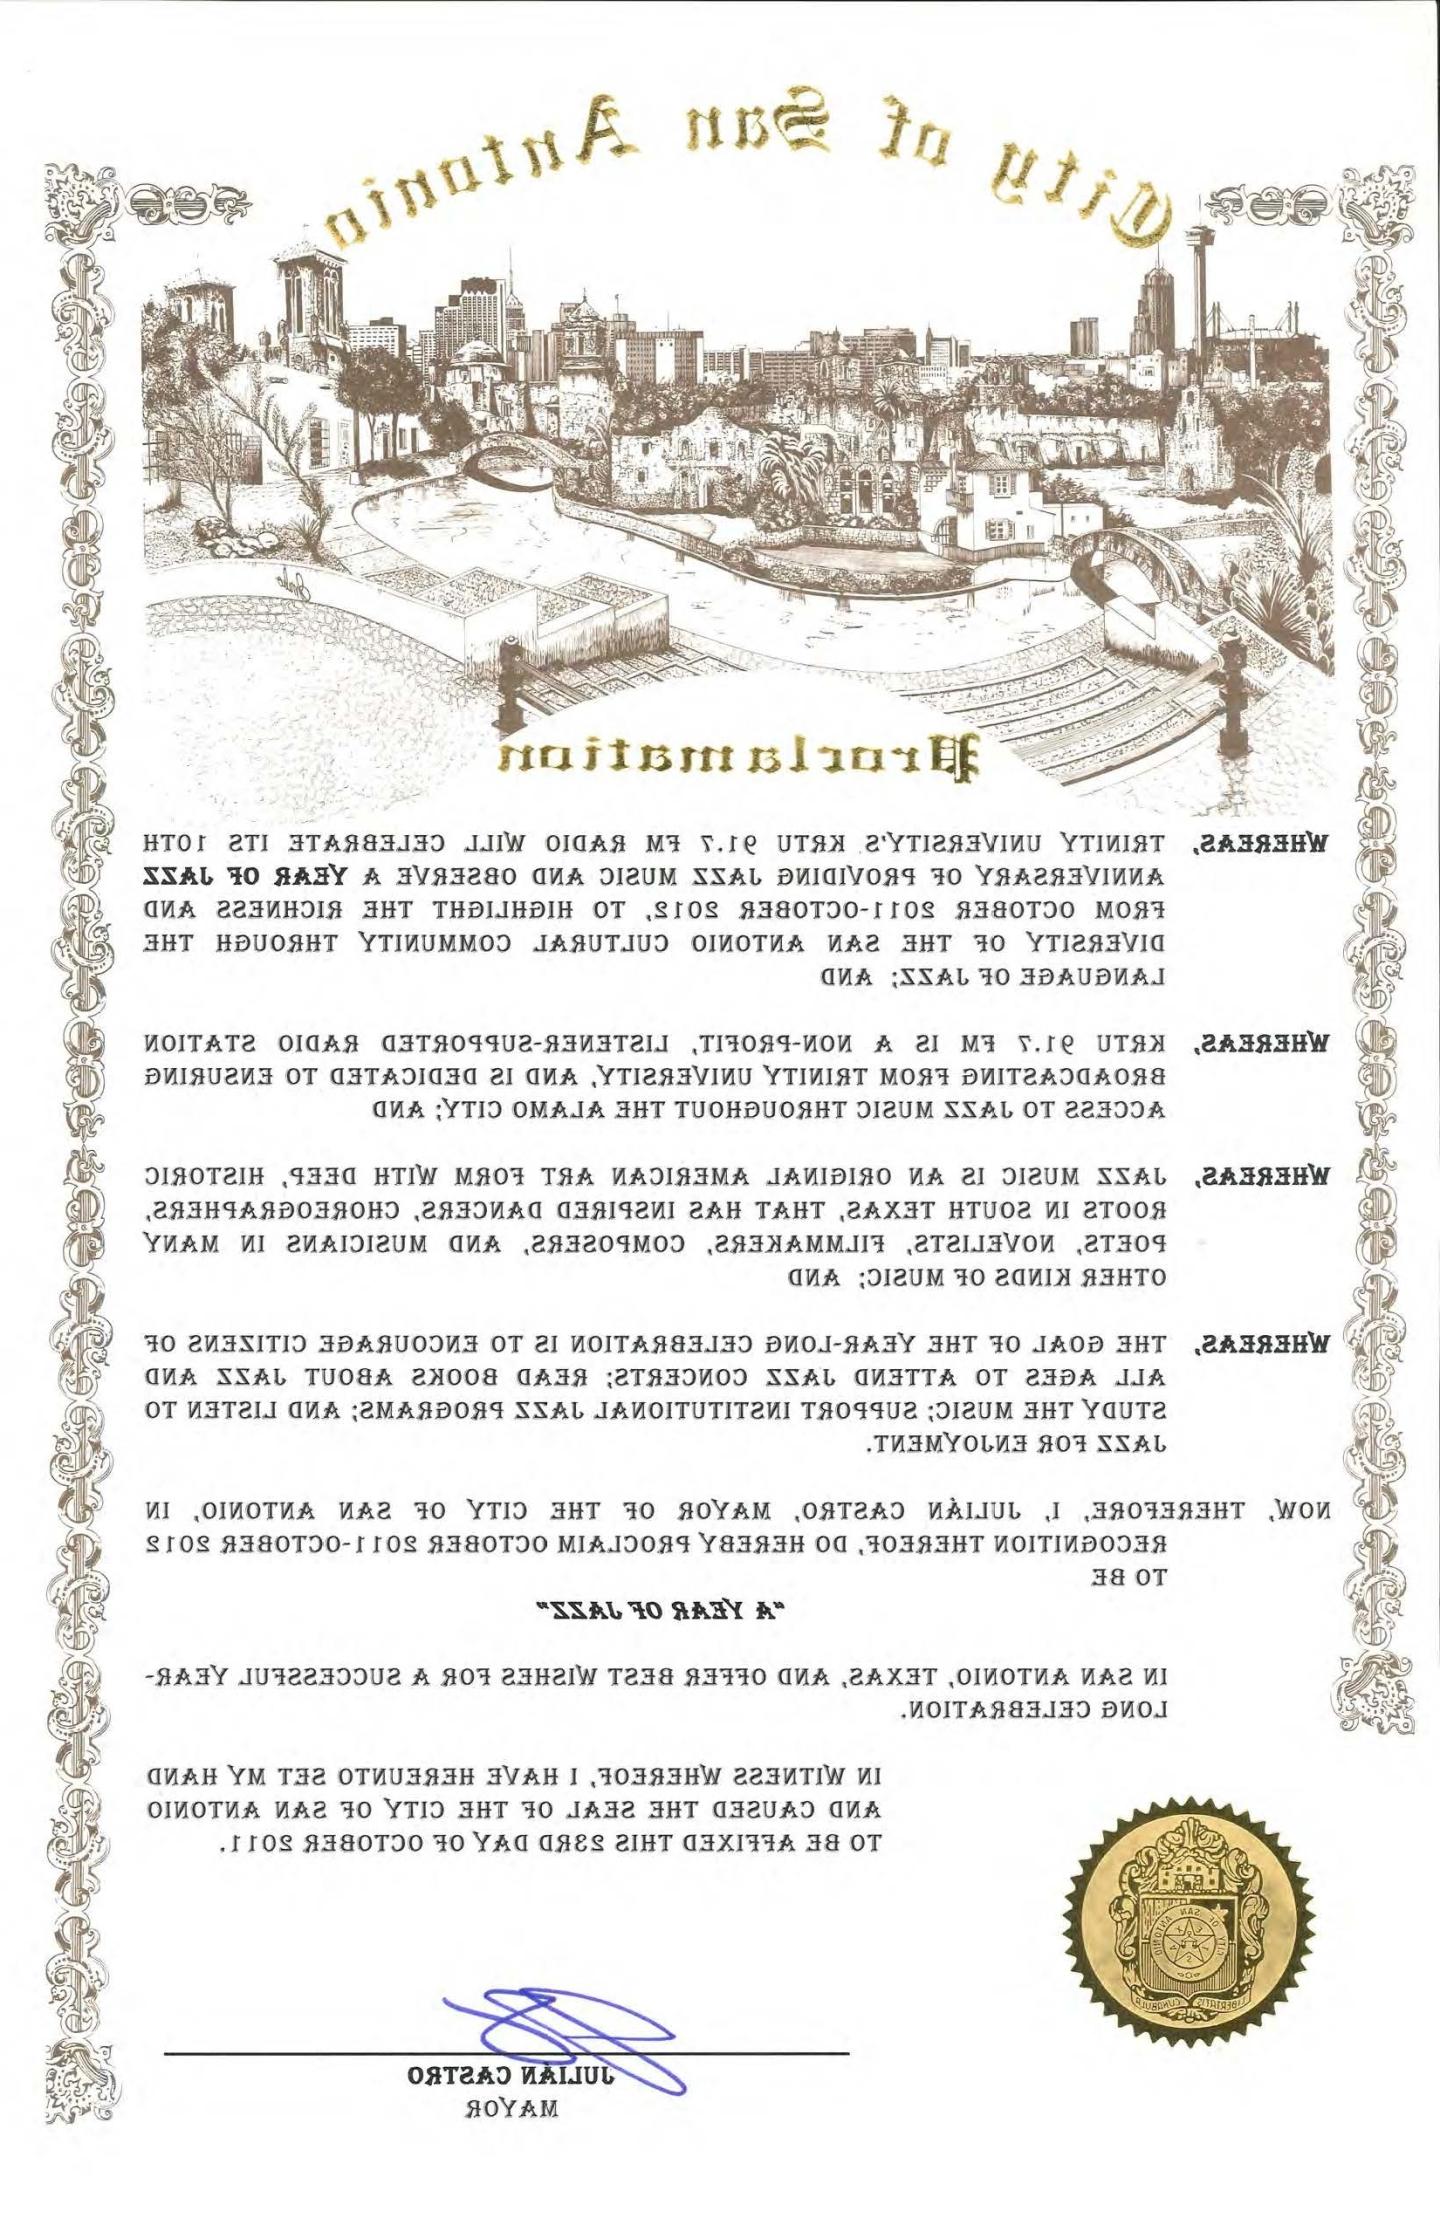 image of City of San Antonio Proclamation 2011